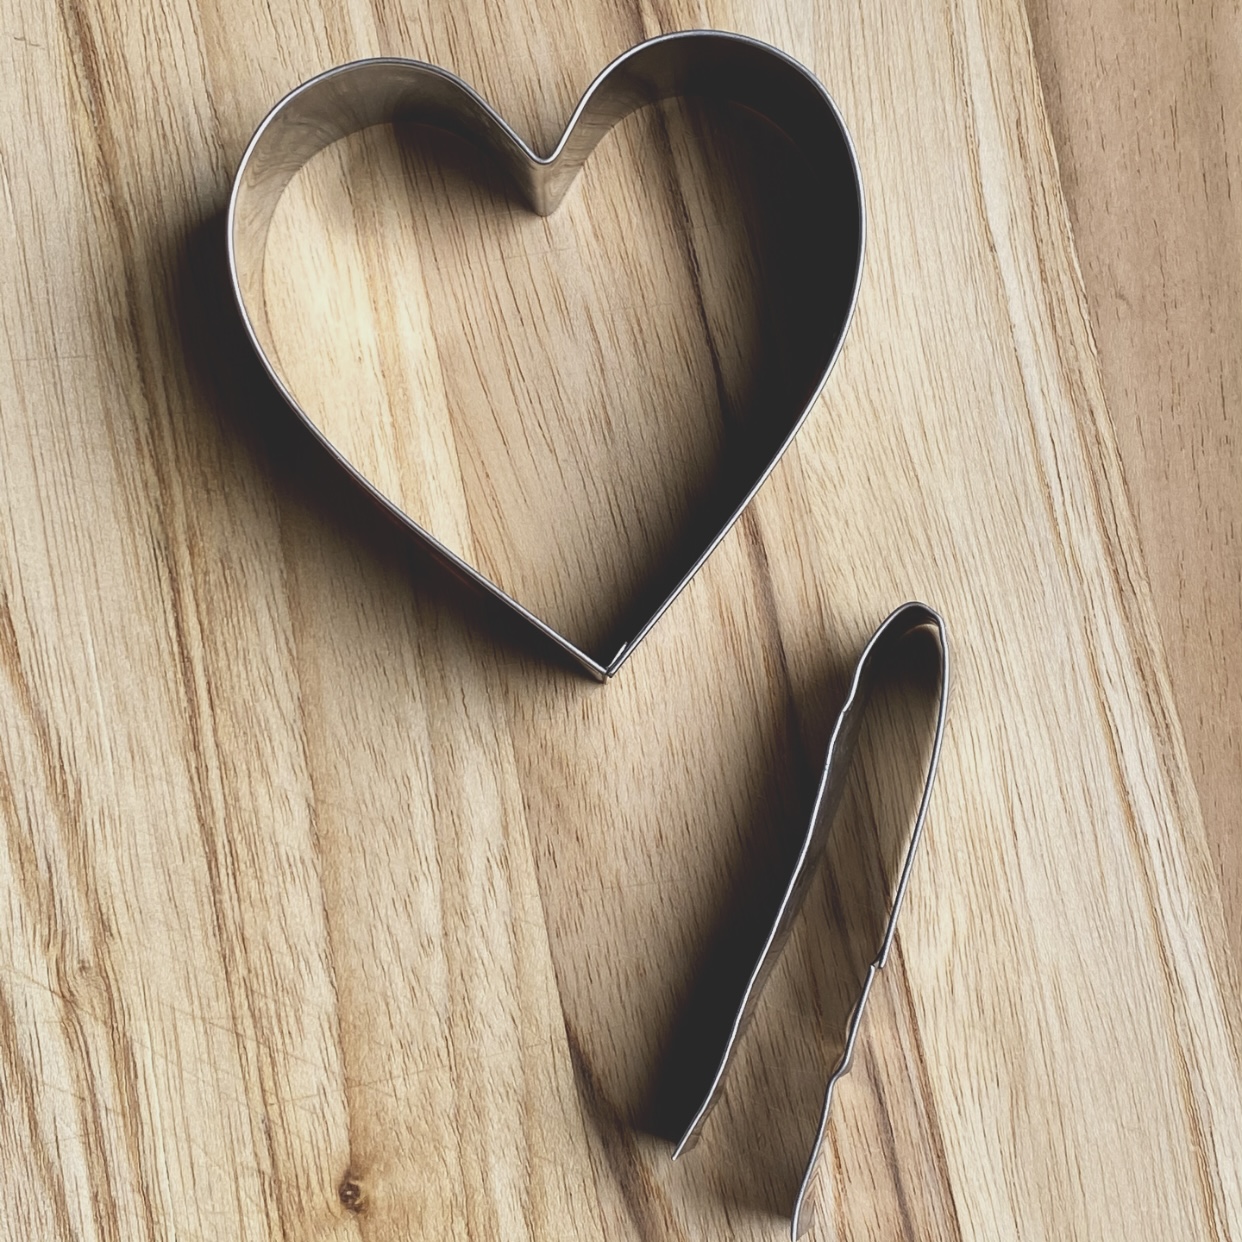 Heart shape cookie cutter with notch cutter on a wood board.